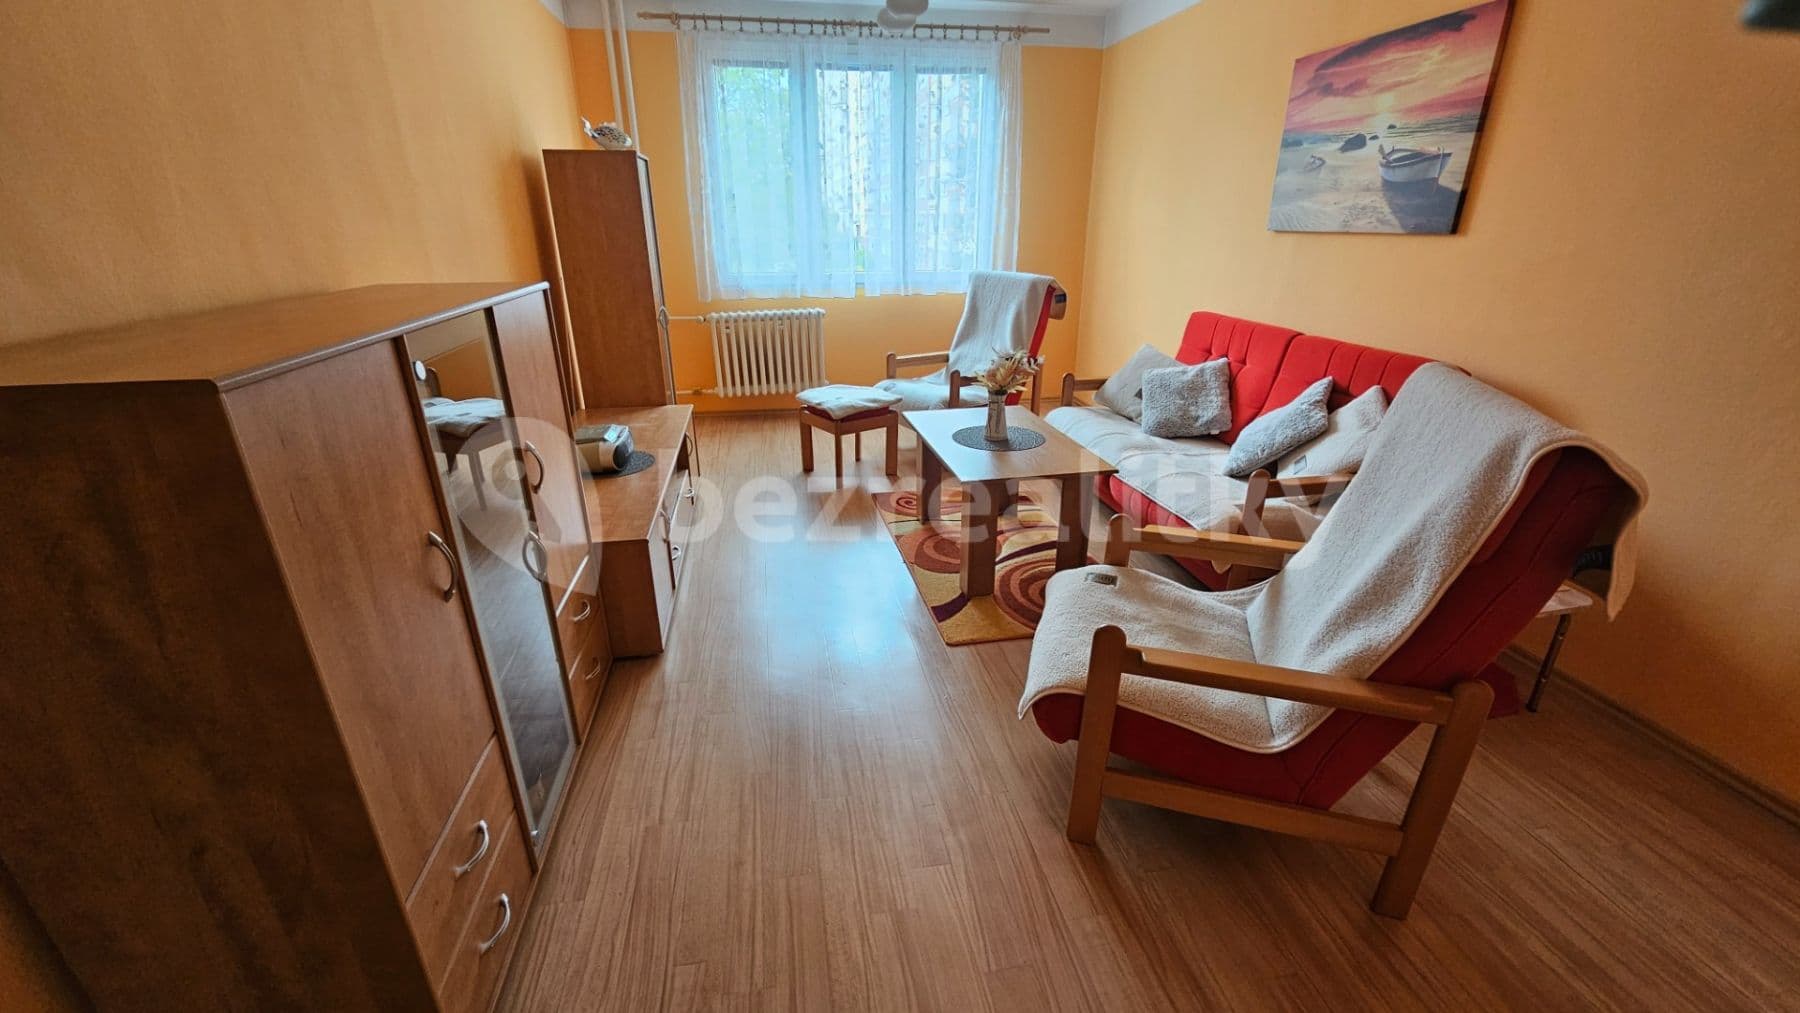 2 bedroom flat to rent, 65 m², Macháčkova, Plzeň, Plzeňský Region